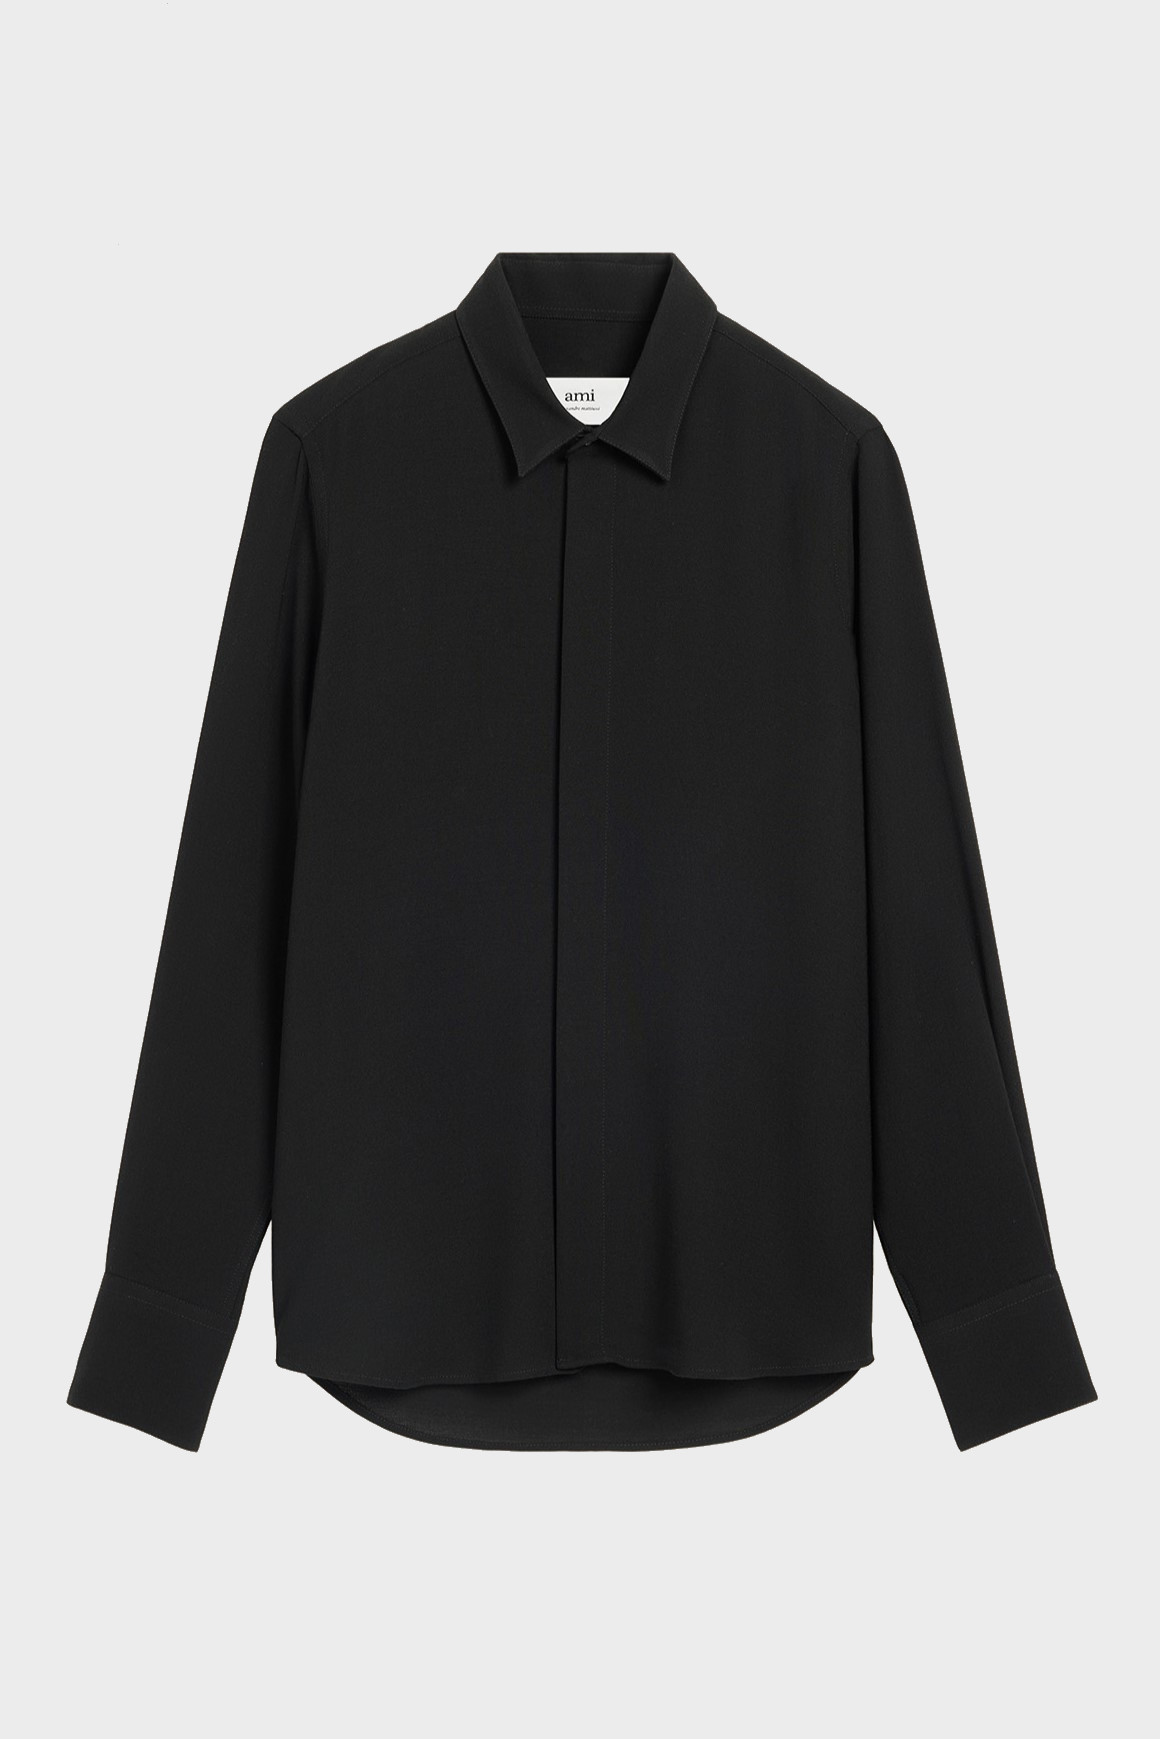 AMI PARIS De Coeur Gabardine Classic Shirt in Black